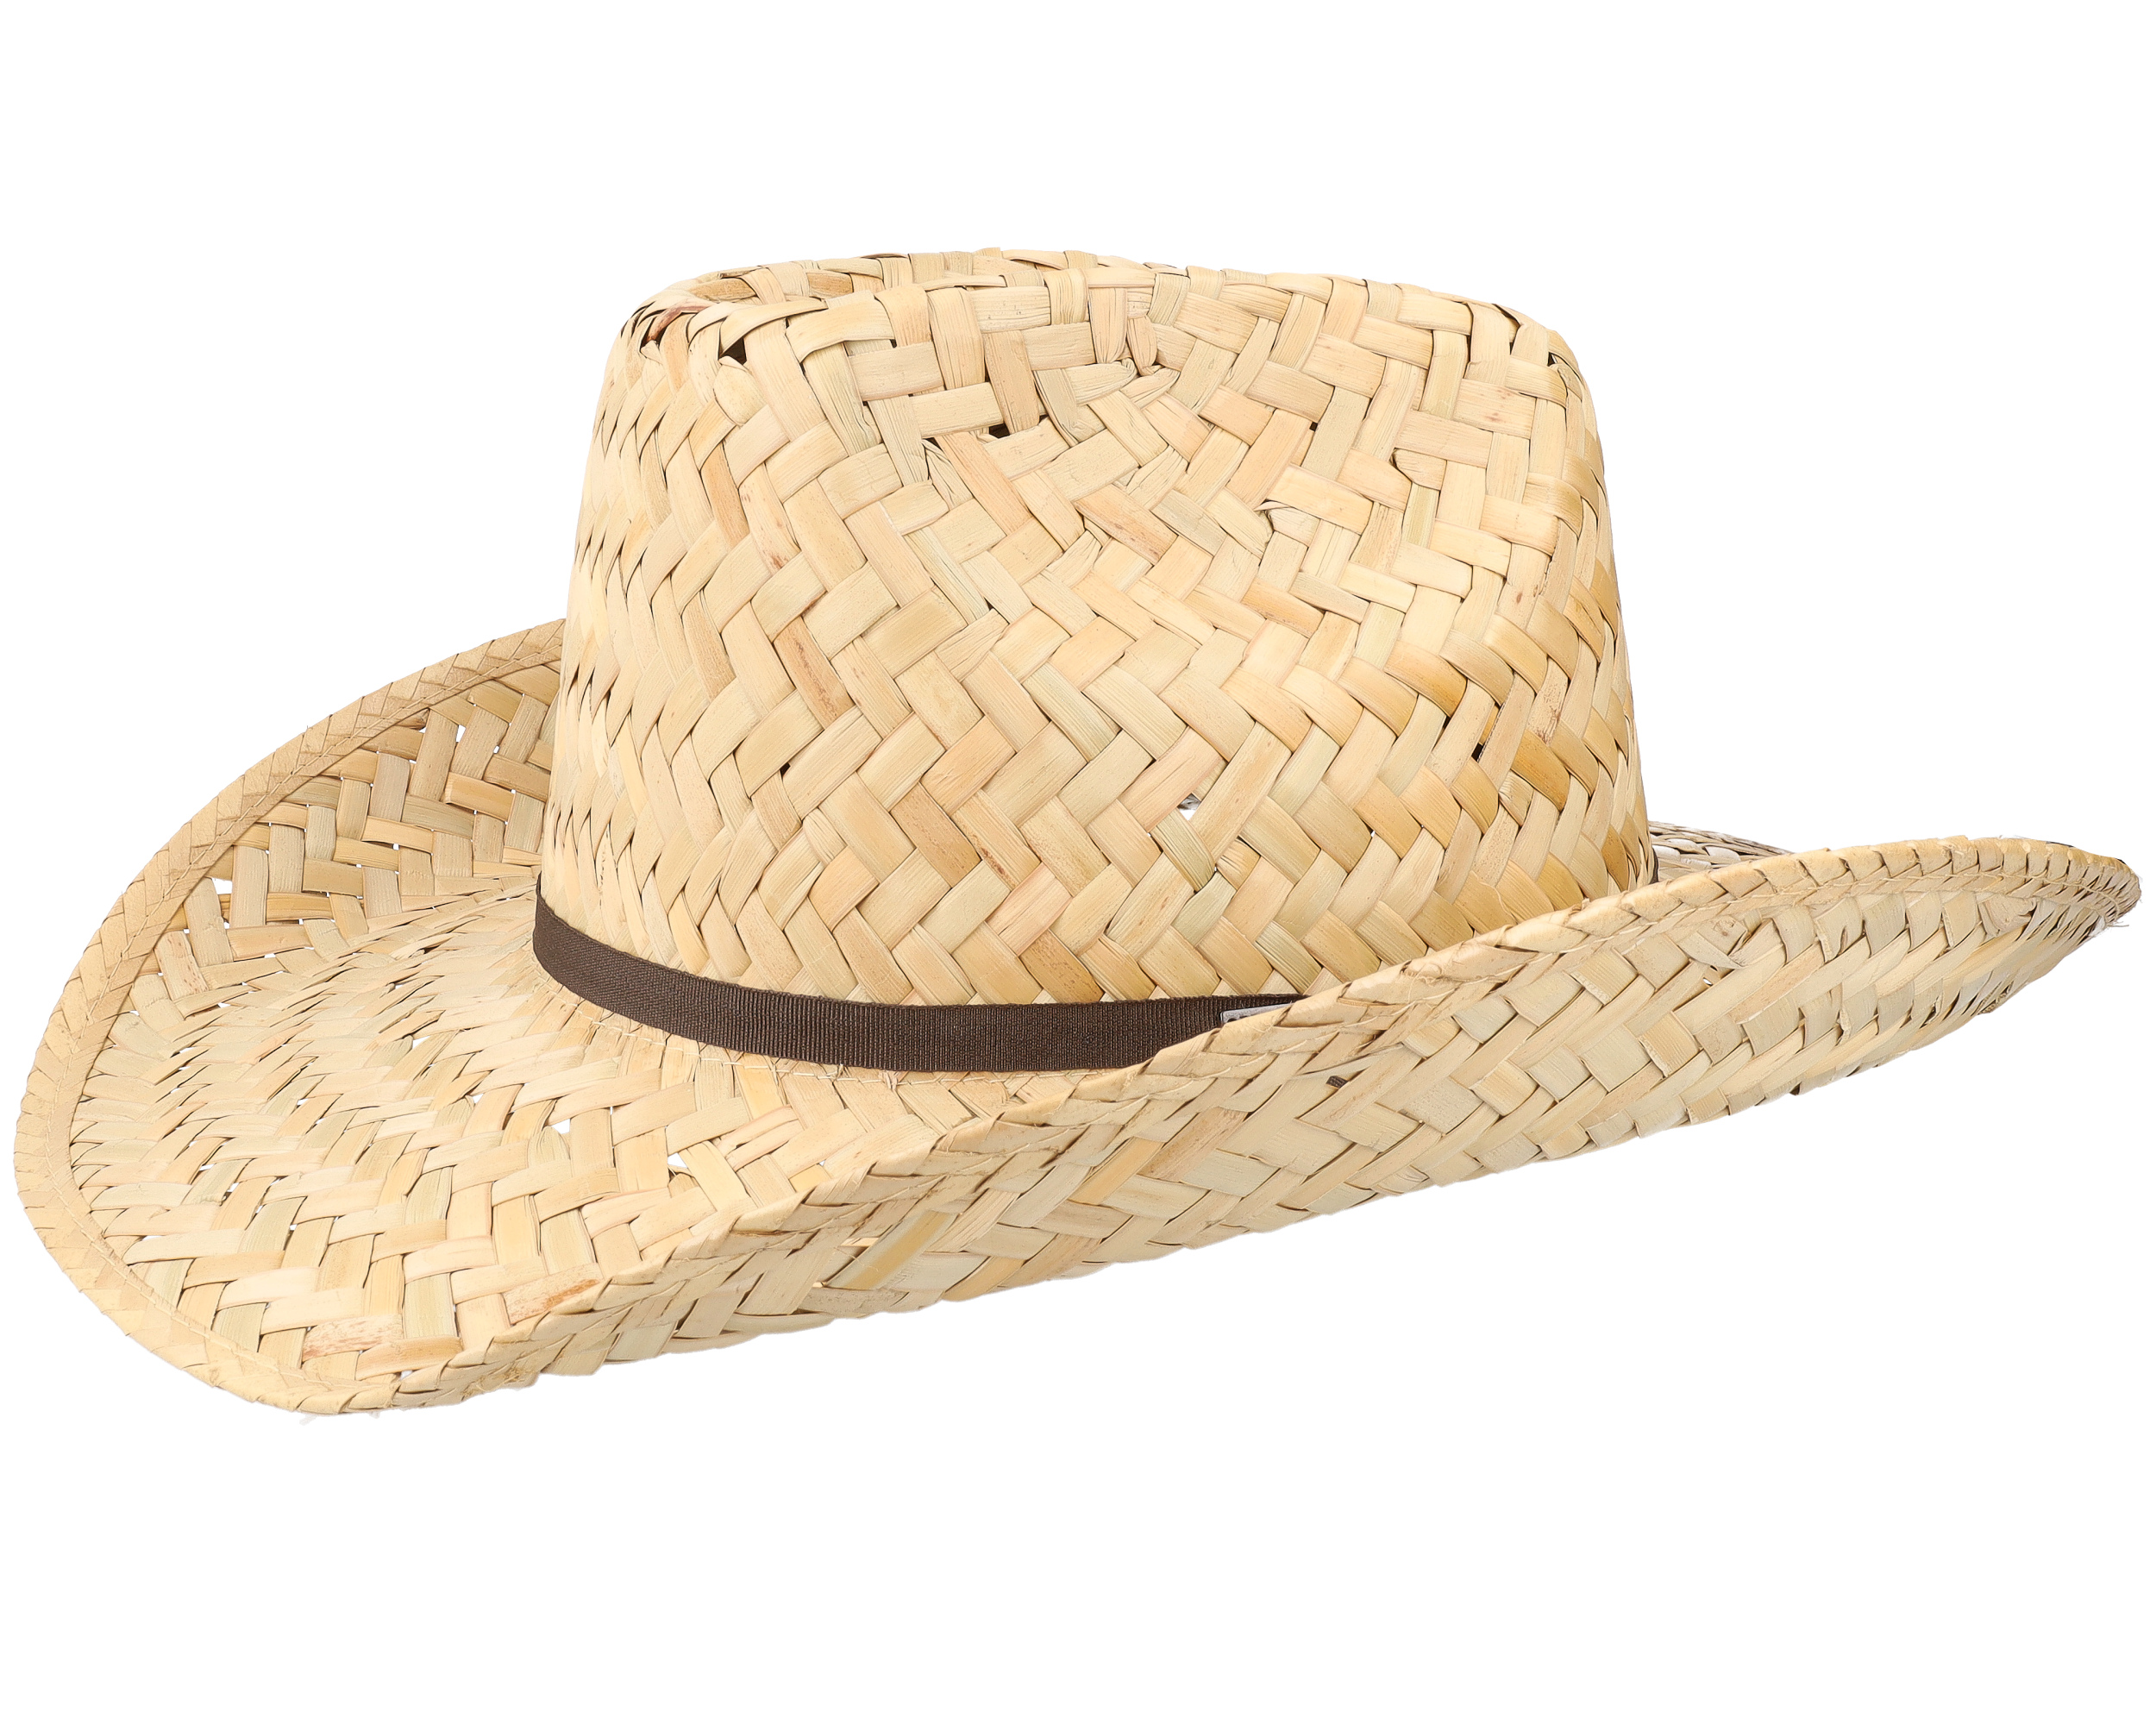 Brixton - Houston Straw Cowboy Hat - Natural - S/M